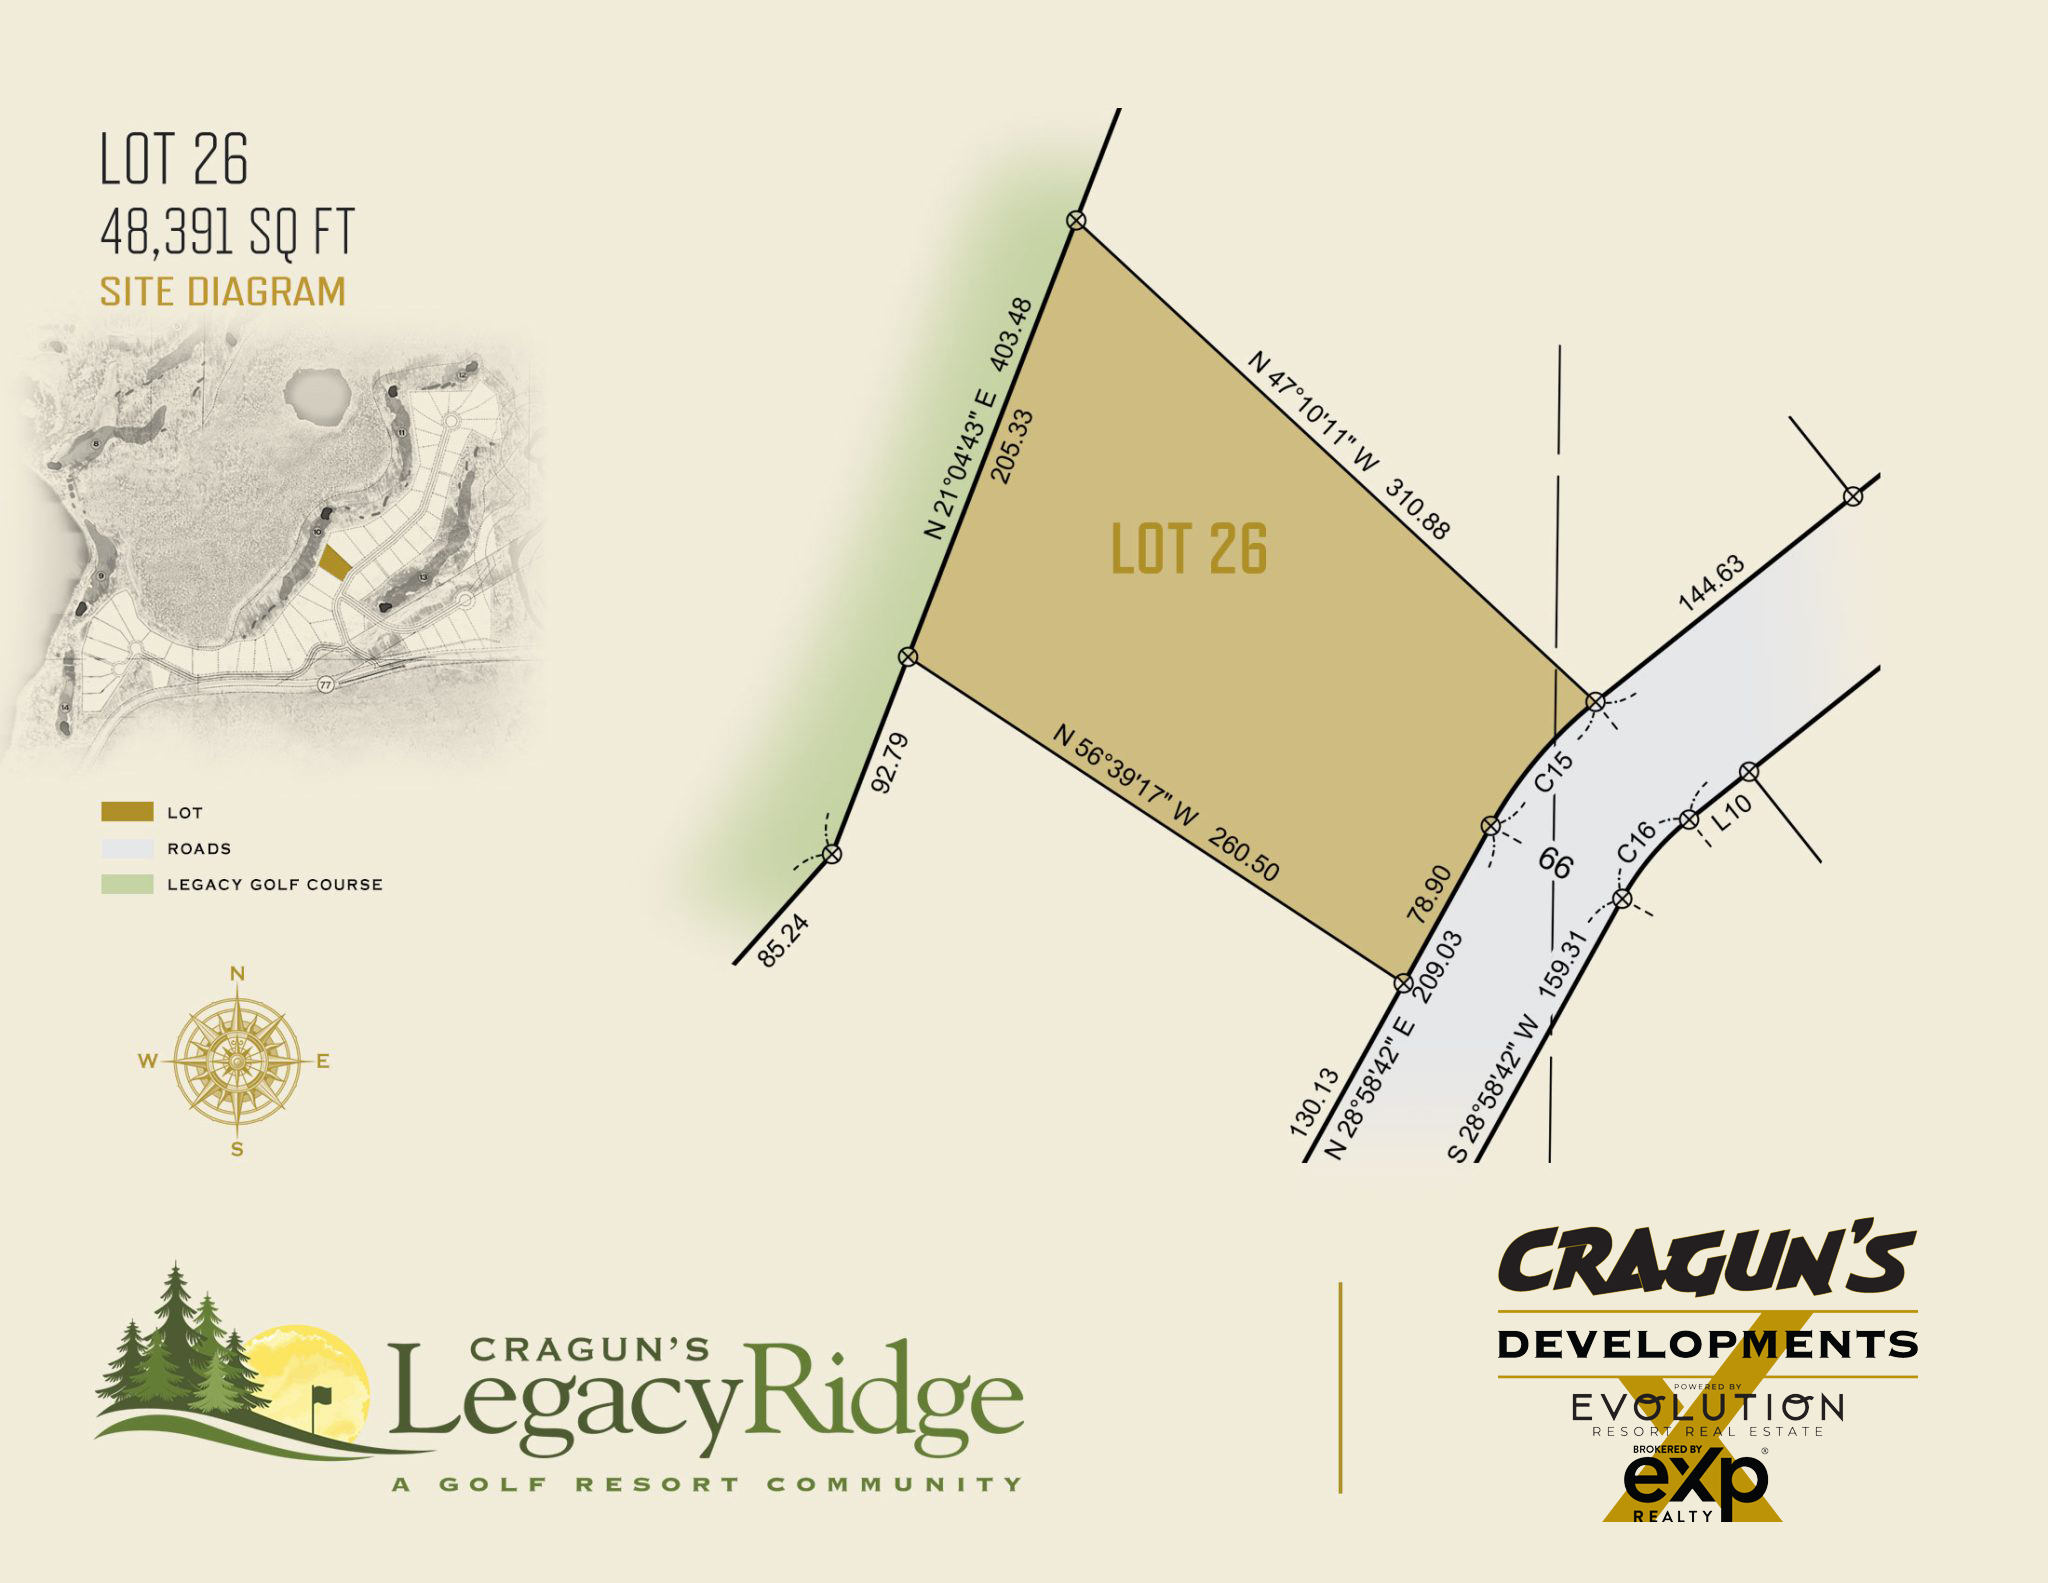 Legacy Ridge Lot 26 at Cragun's Developments in Brainerd, MN